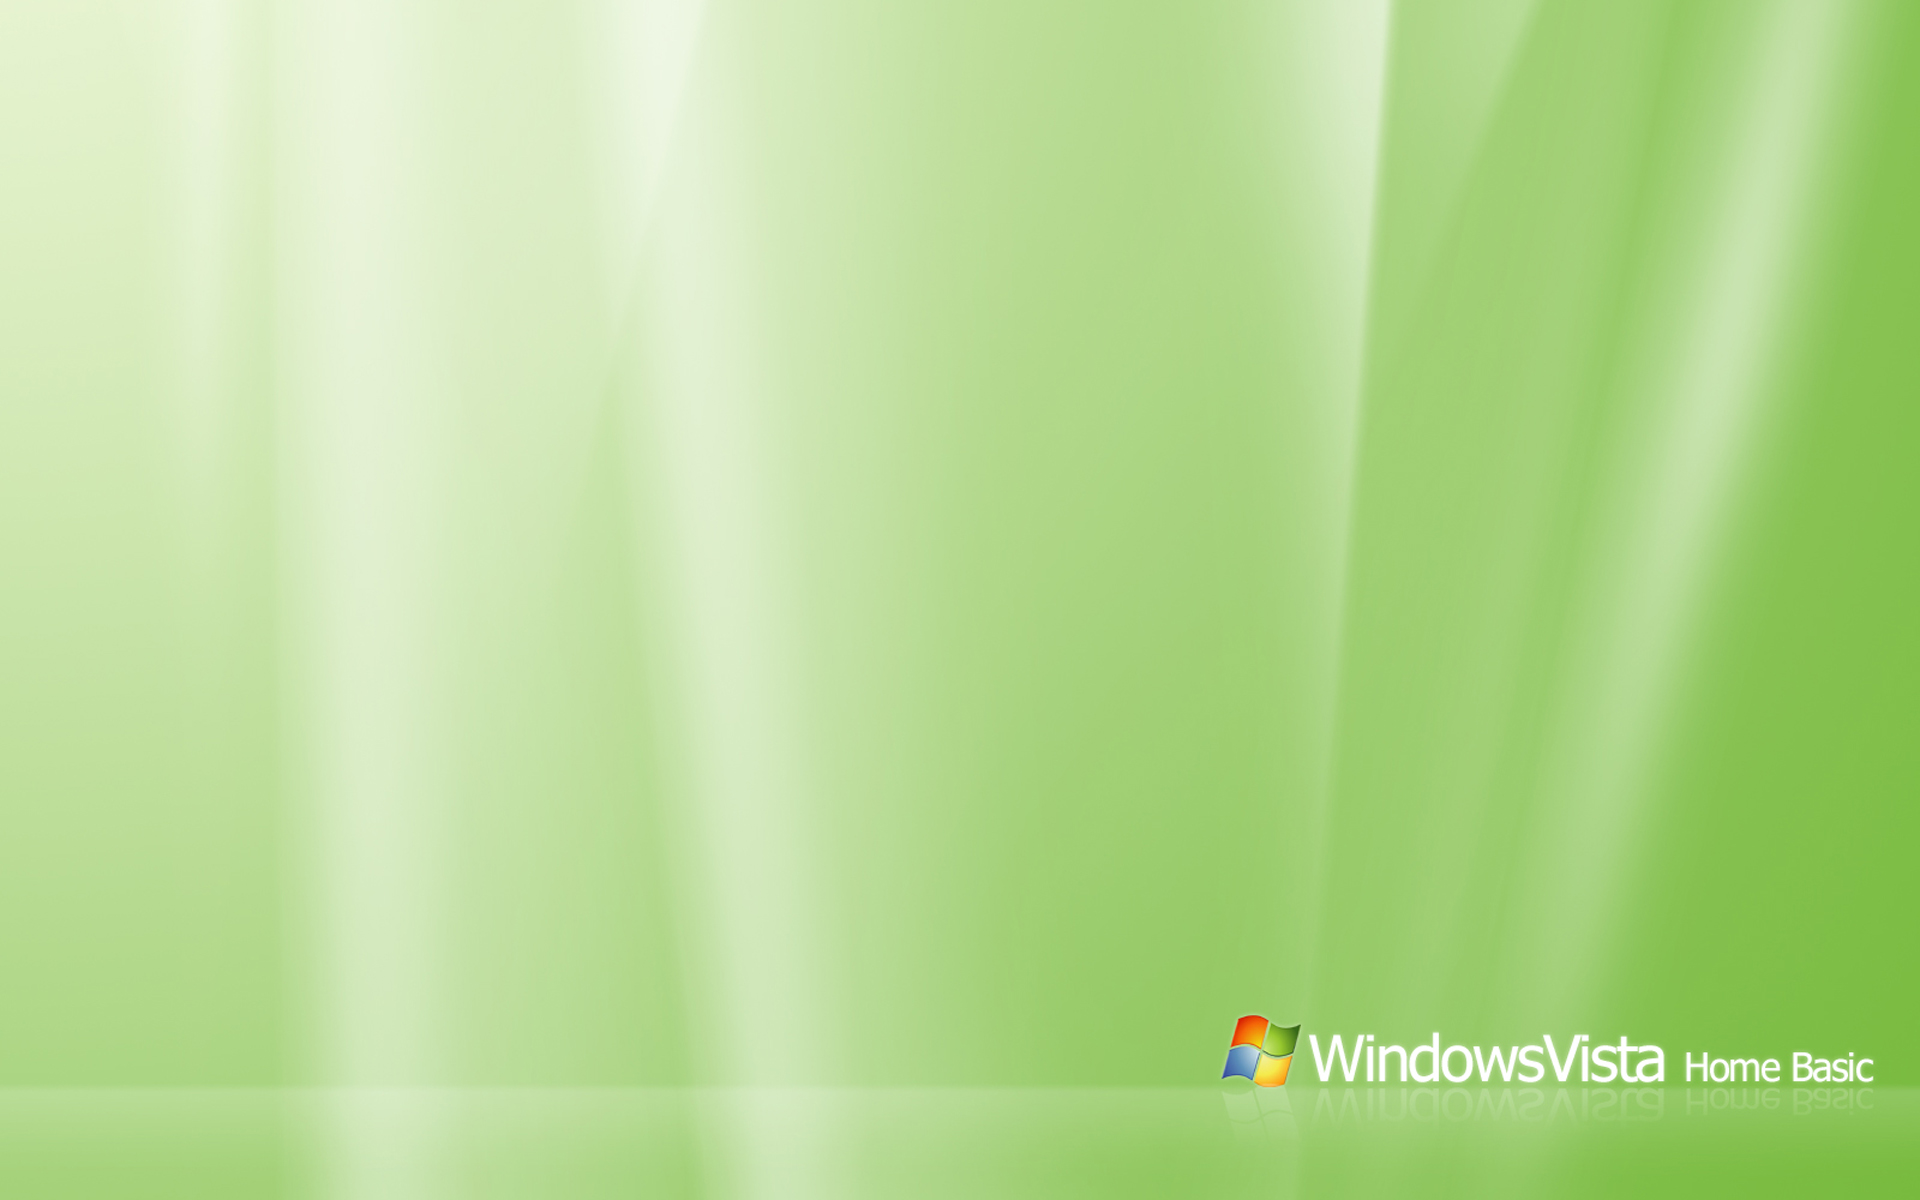 Windows Vista Home Basic Wallpaper